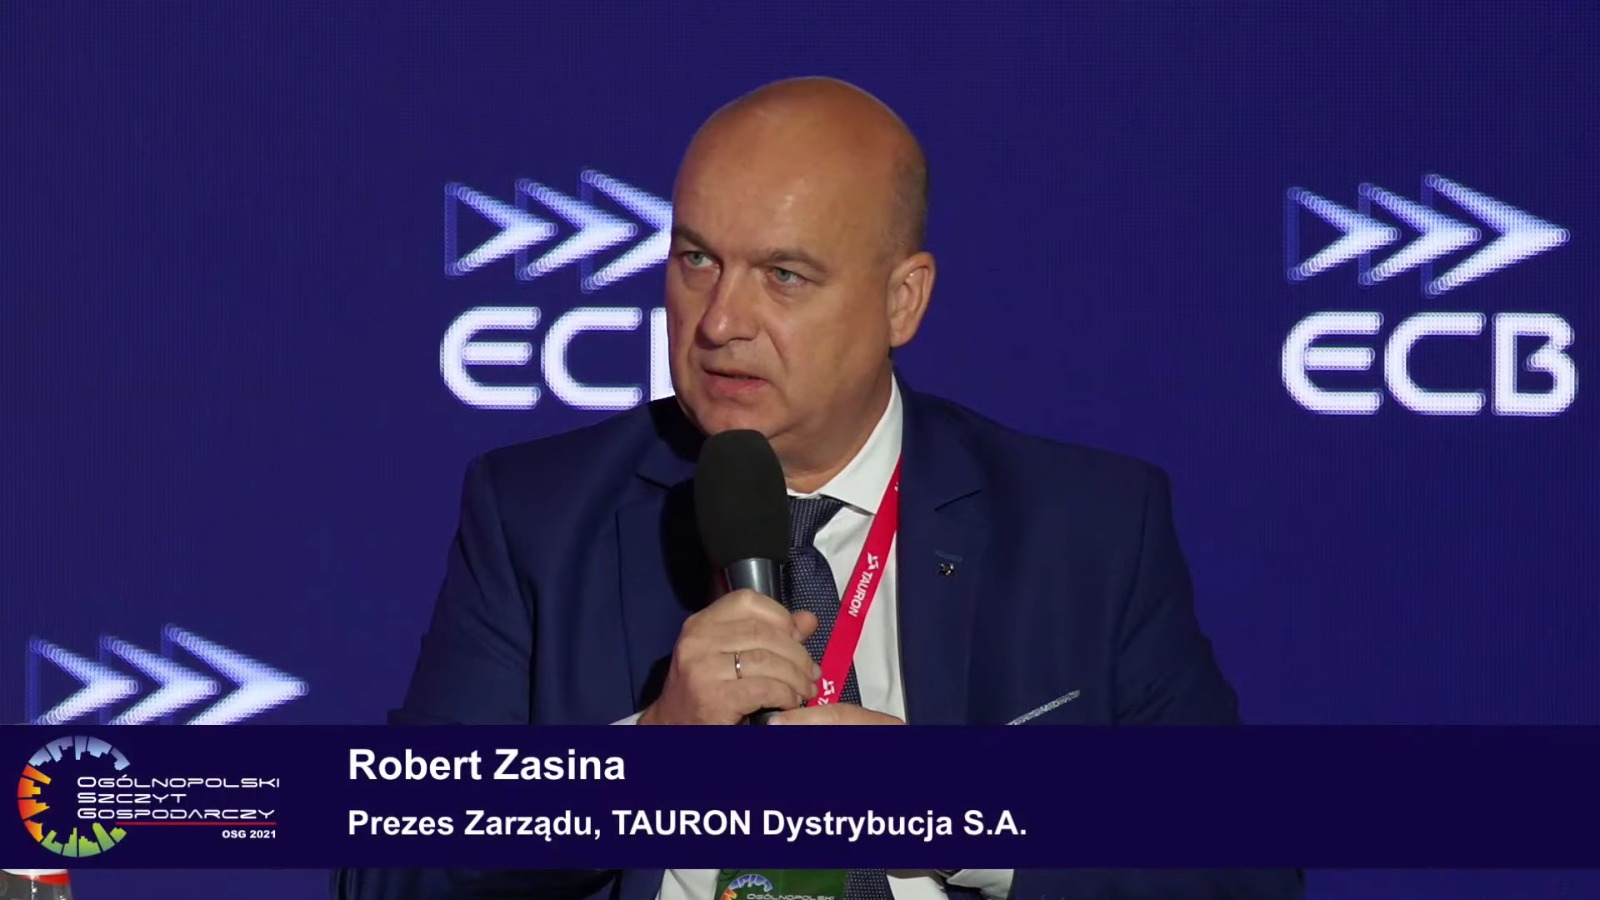 Prezes Tauron Dystrybucja Robert Zasina podczas OSG 2021. Fot. BiznesAlert.pl